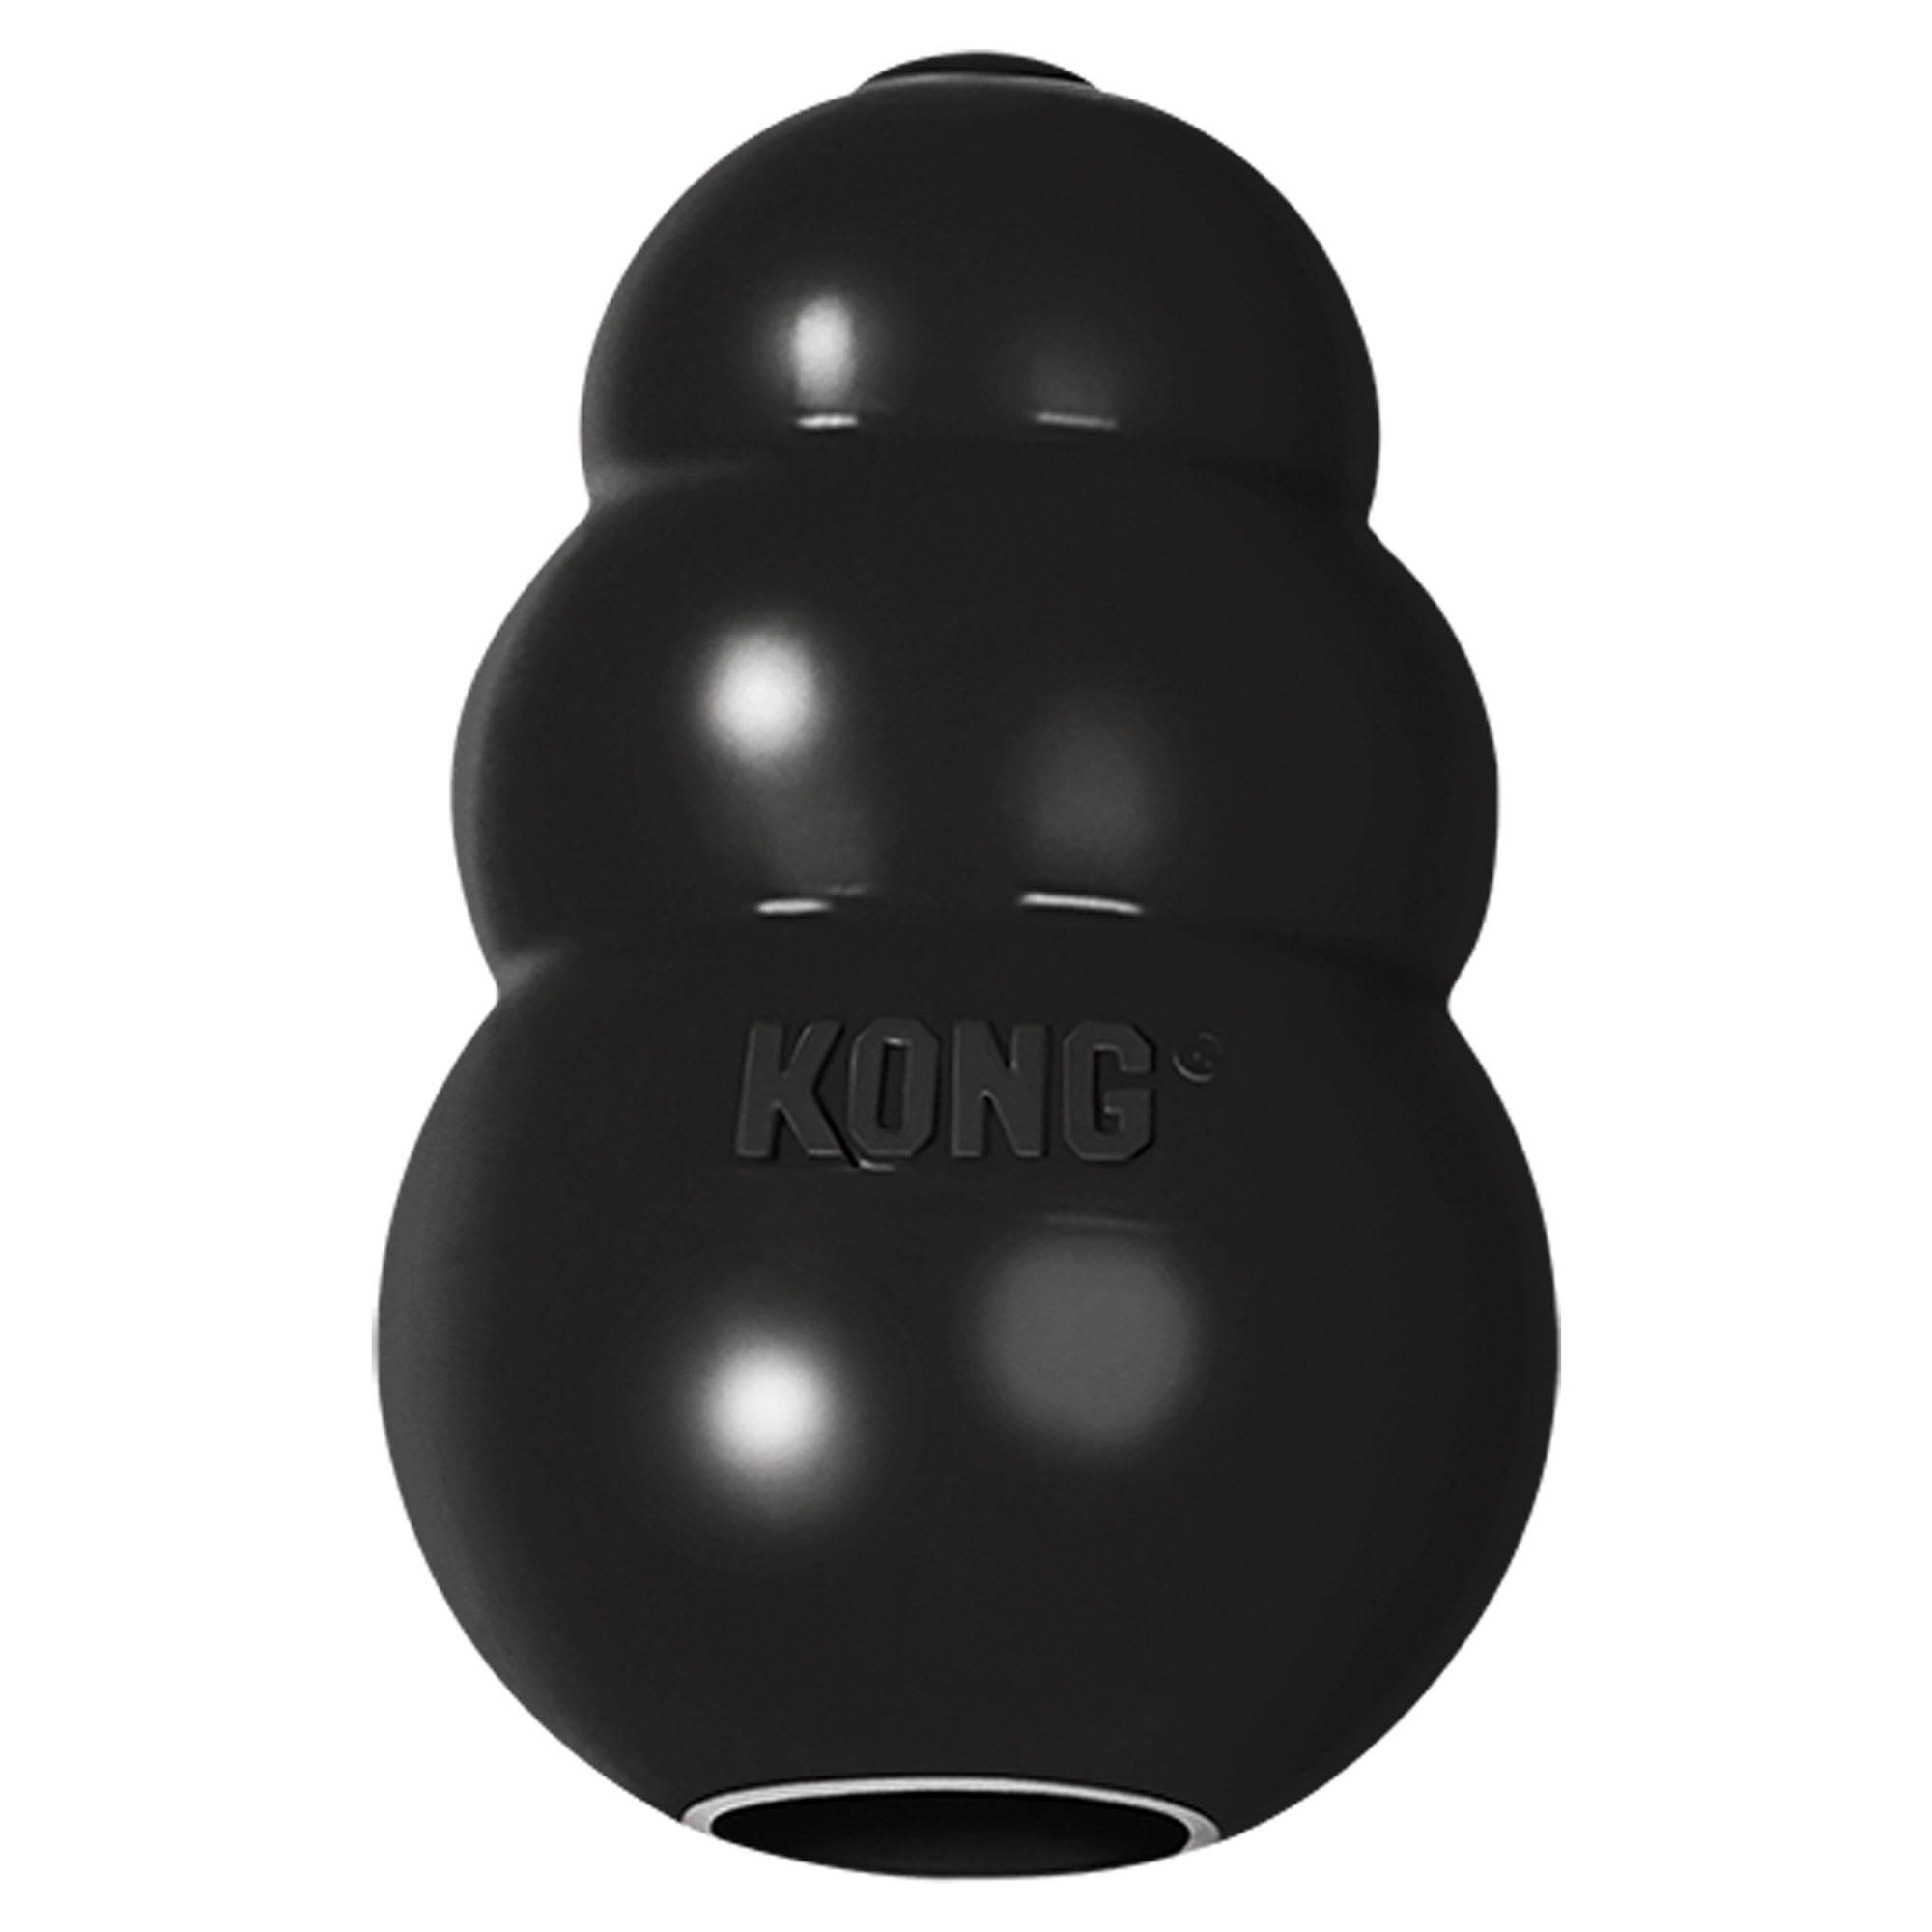 Kong Extreme Rubber Dog Toy - Black, Medium